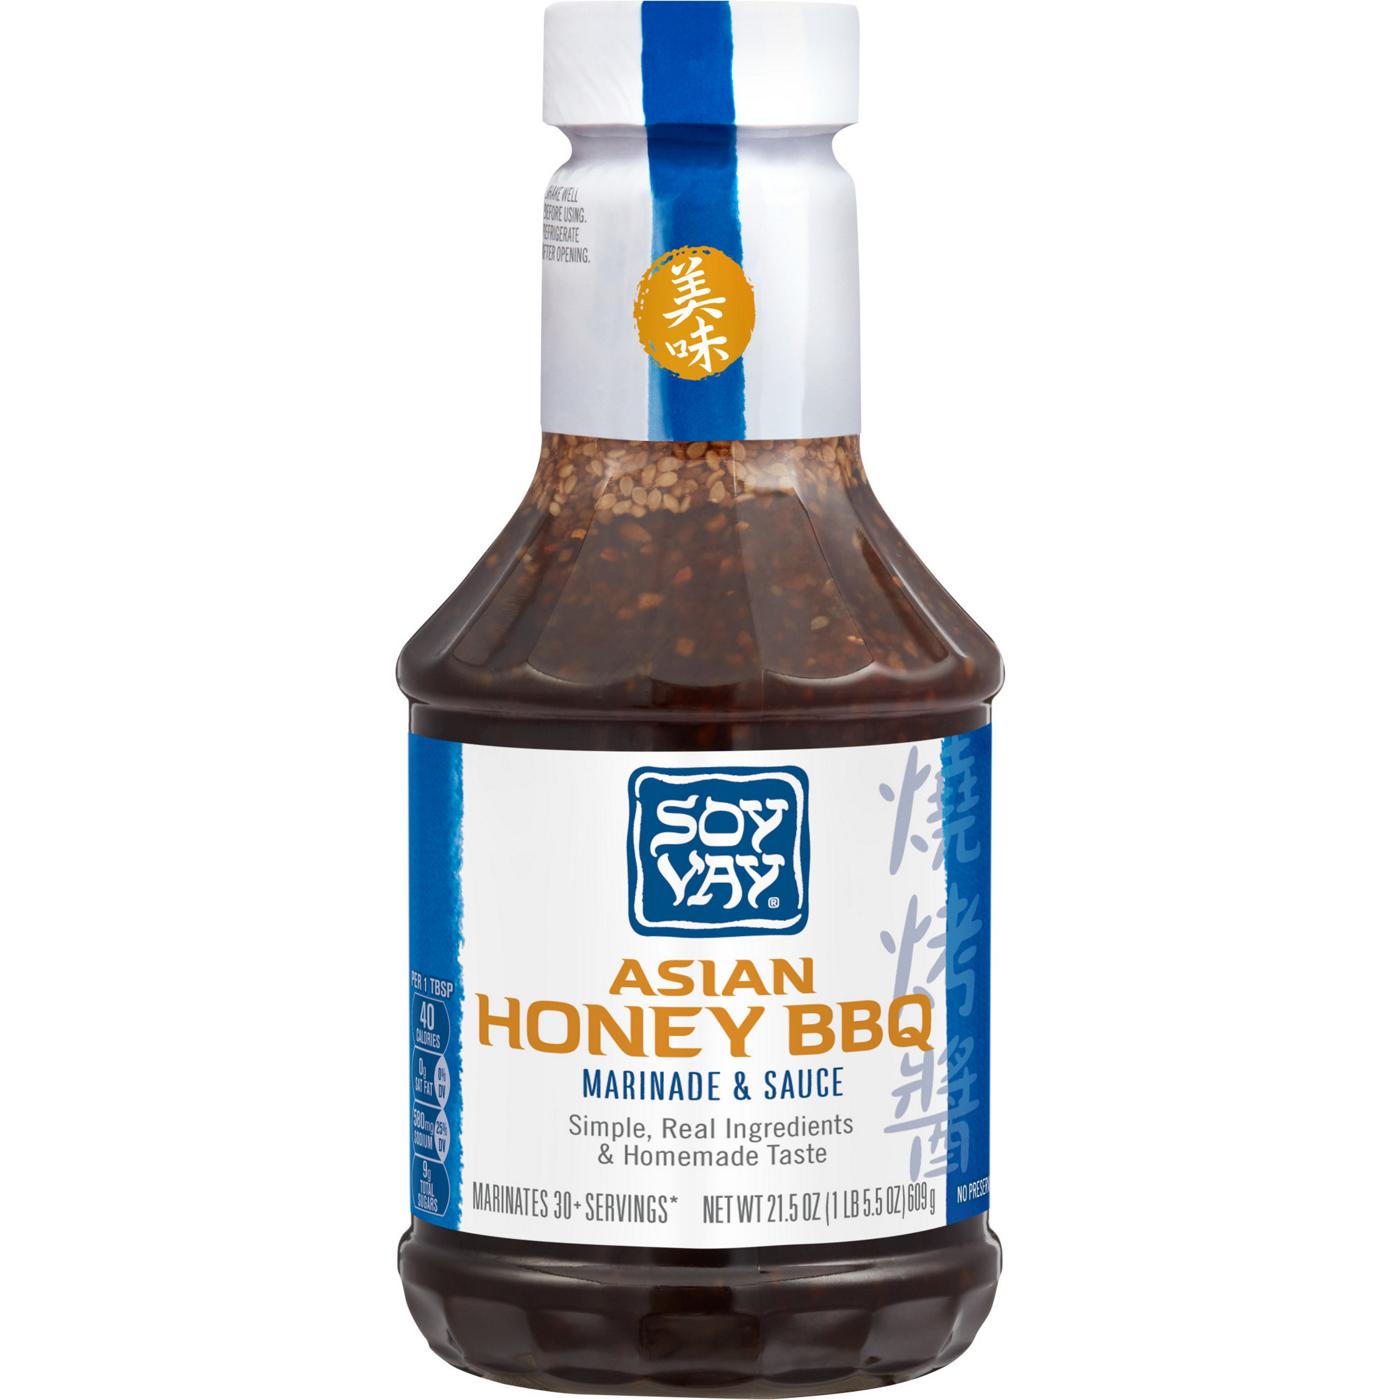 Soy Vay Asian Honey BBQ Marinade and Sauce; image 1 of 2